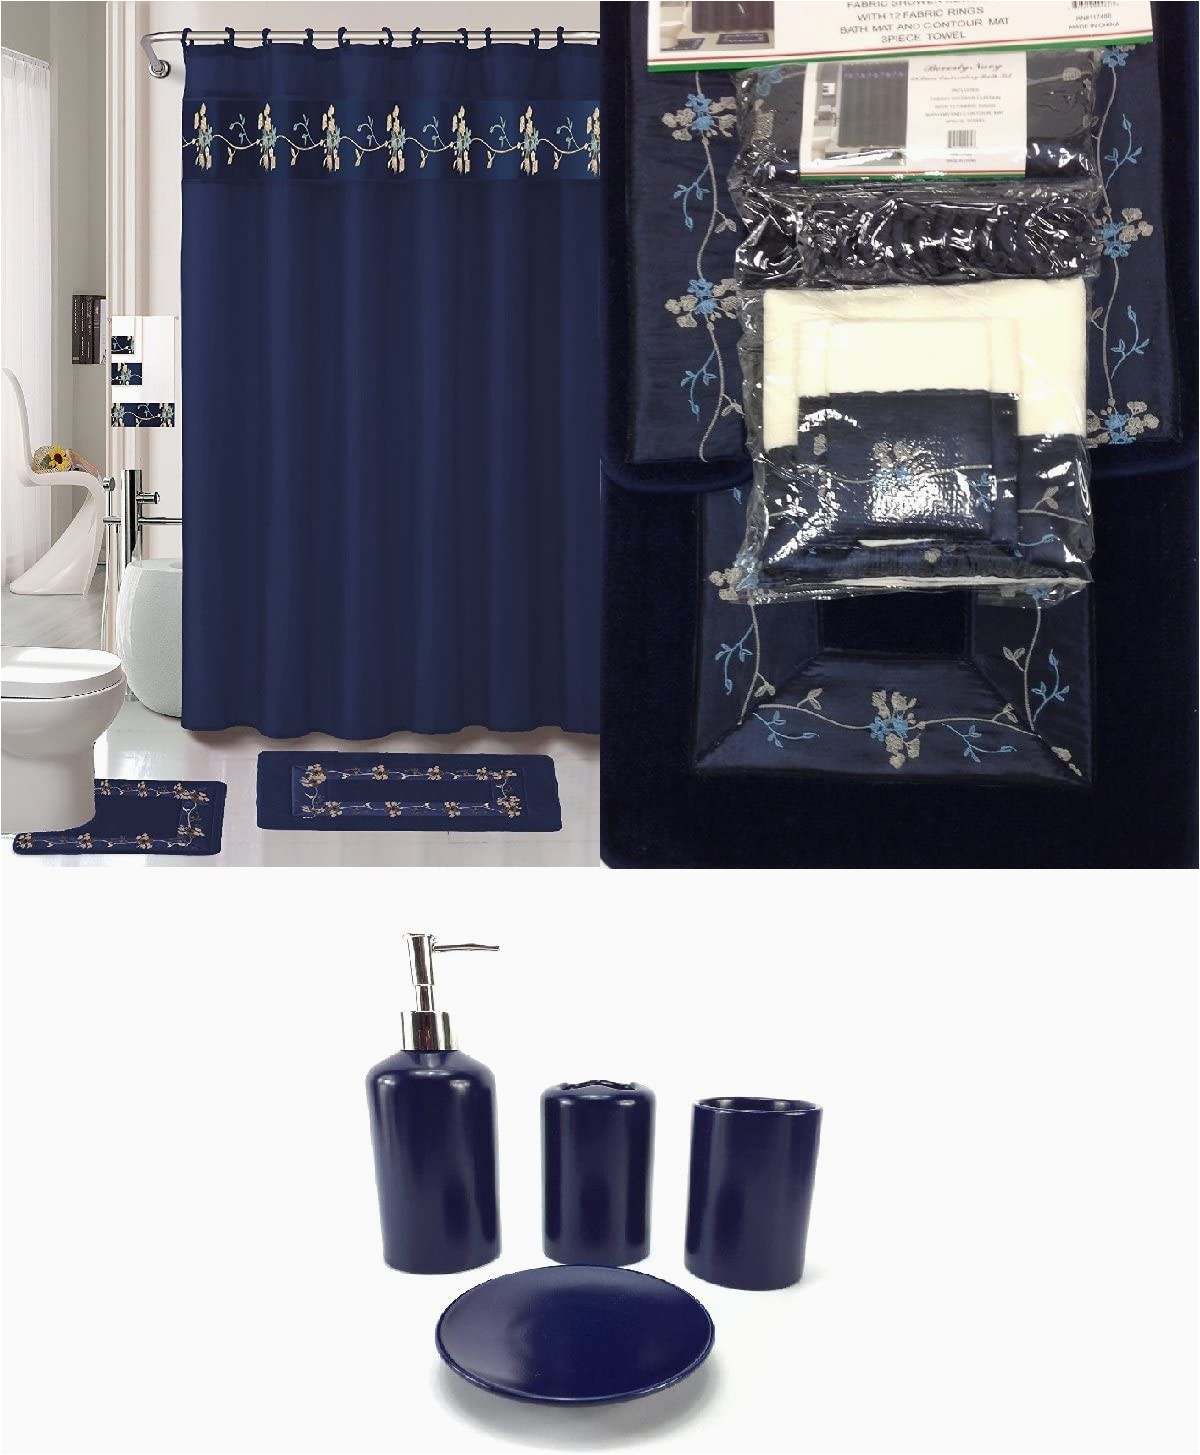 Bathroom Rugs and Accessories 22 Piece Bath Accessory Set Navy Blue Flower Bathroom Rug Set Shower Curtain & Accessories